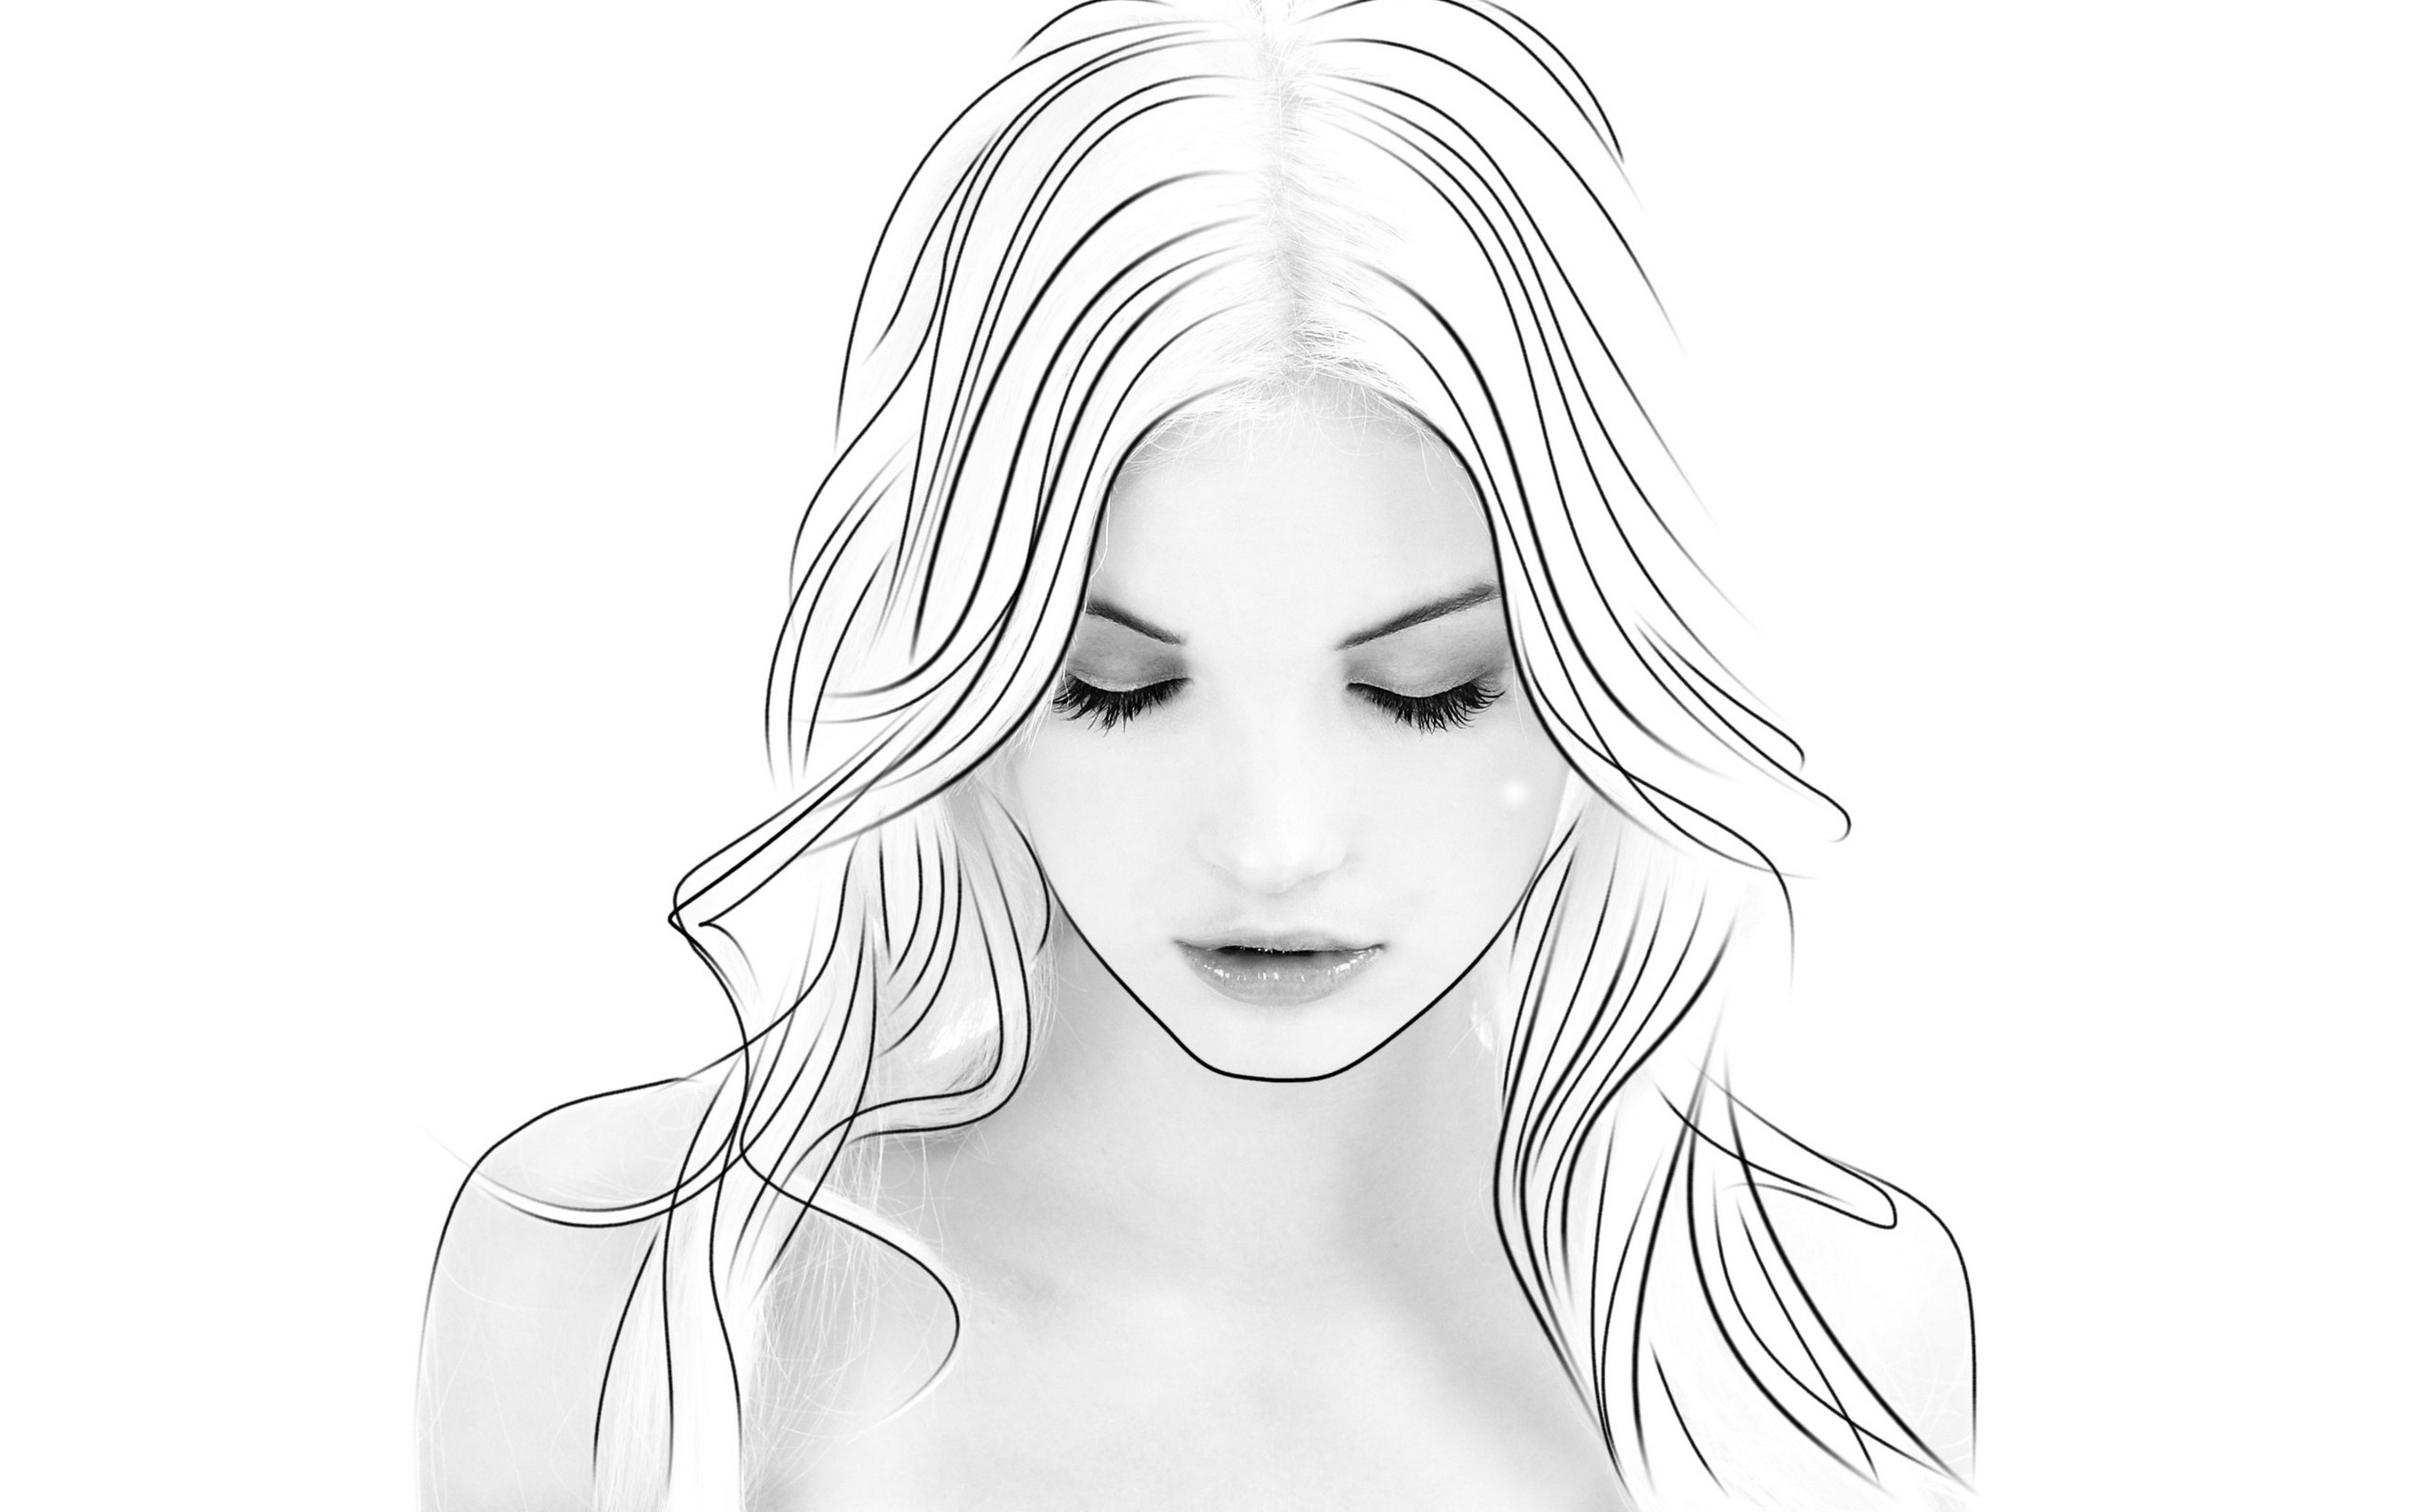 wallpapersxl_women_eyes_artwork_drawings_faces_white_long_hair_grayscale_closed_franziska_facella_718802_2560x1600.jpg